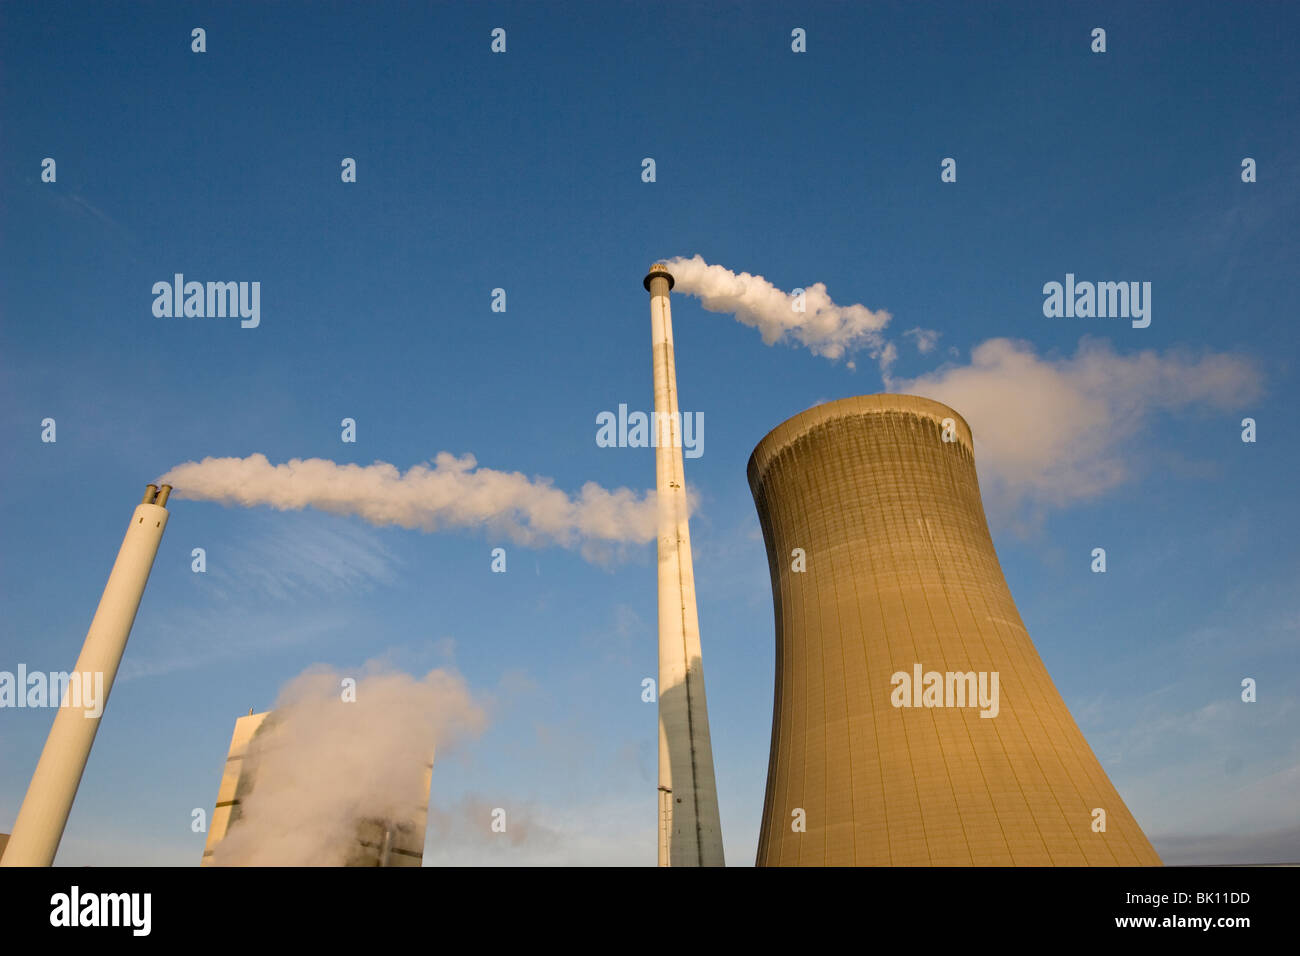 Smocking smokestacks from the brown coal power station Stock Photo